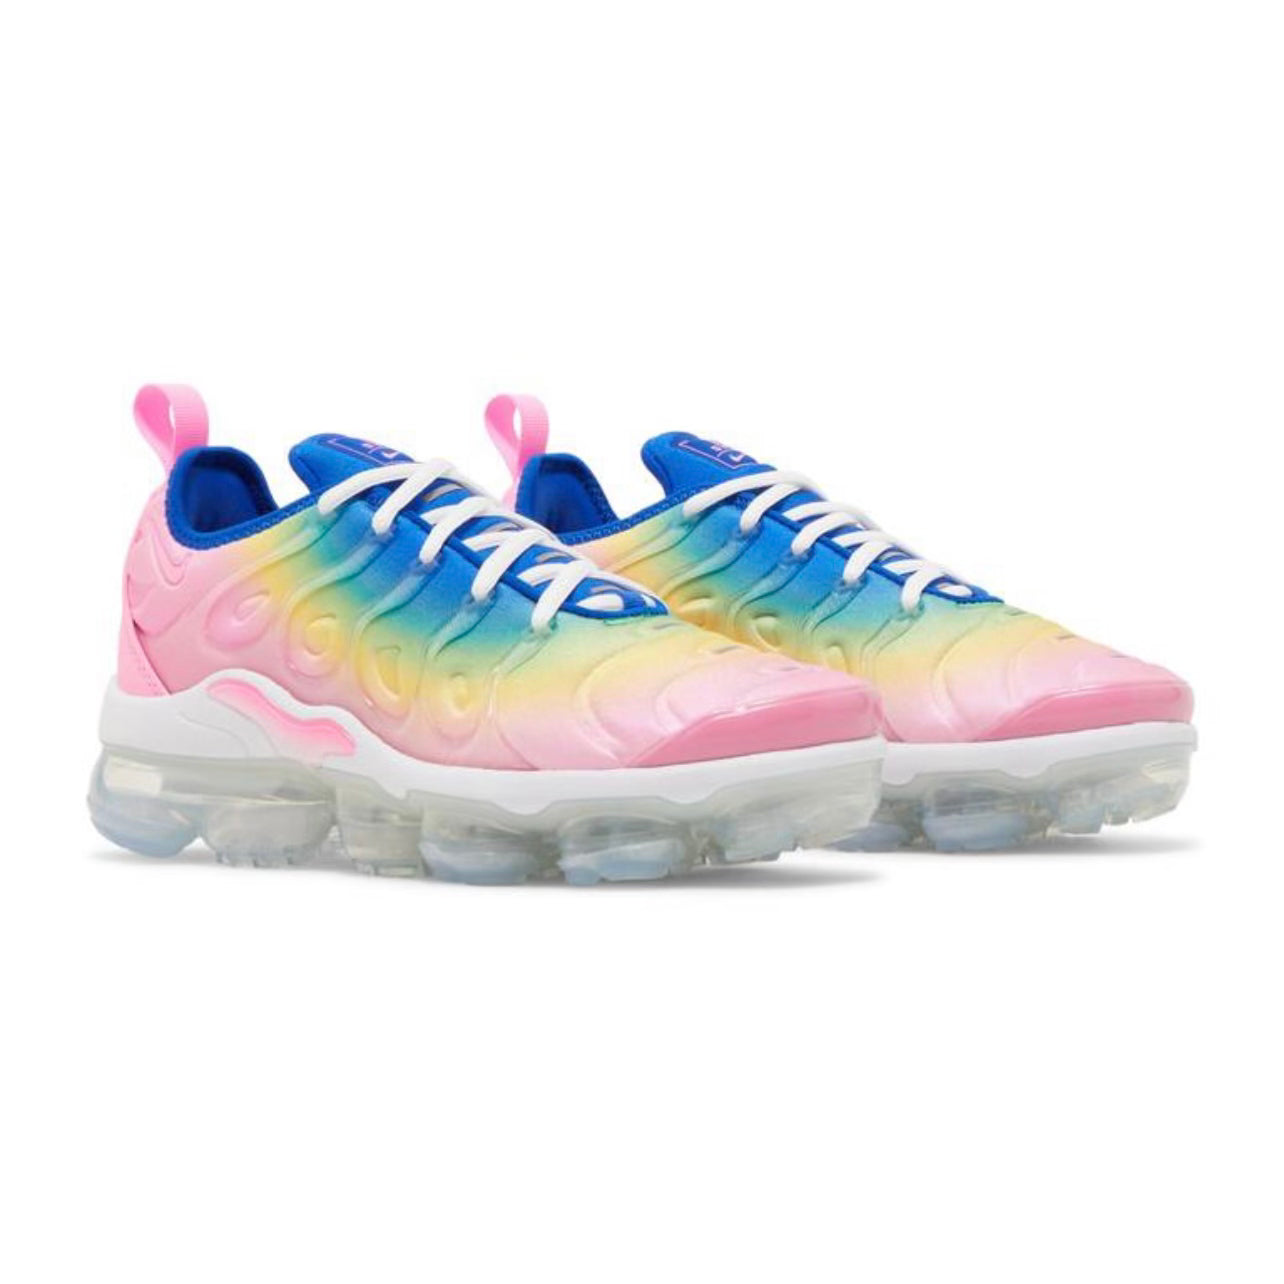 Nike Air Vapormax Plus "Cotton Candy Rainbow"